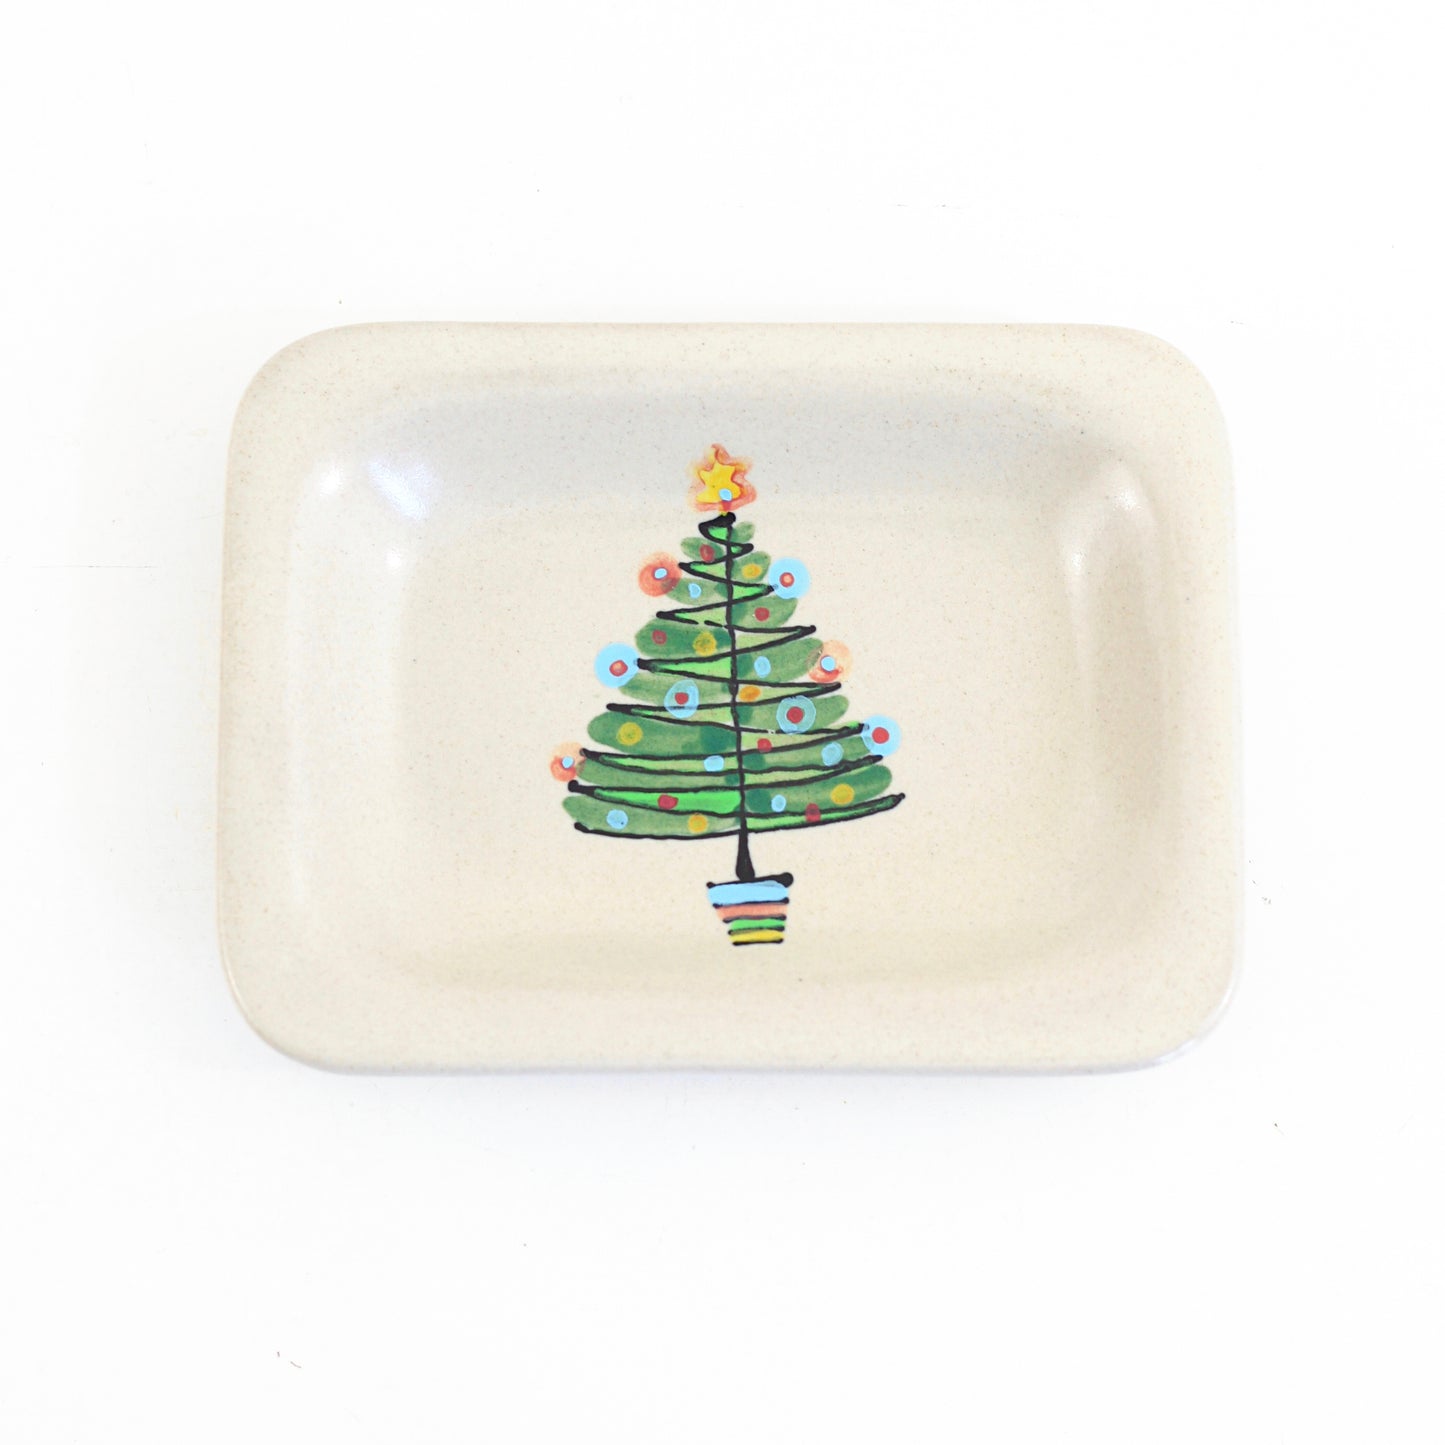 SOLD - Rare Vintage 1950s Glidden Christmas Tree Dish